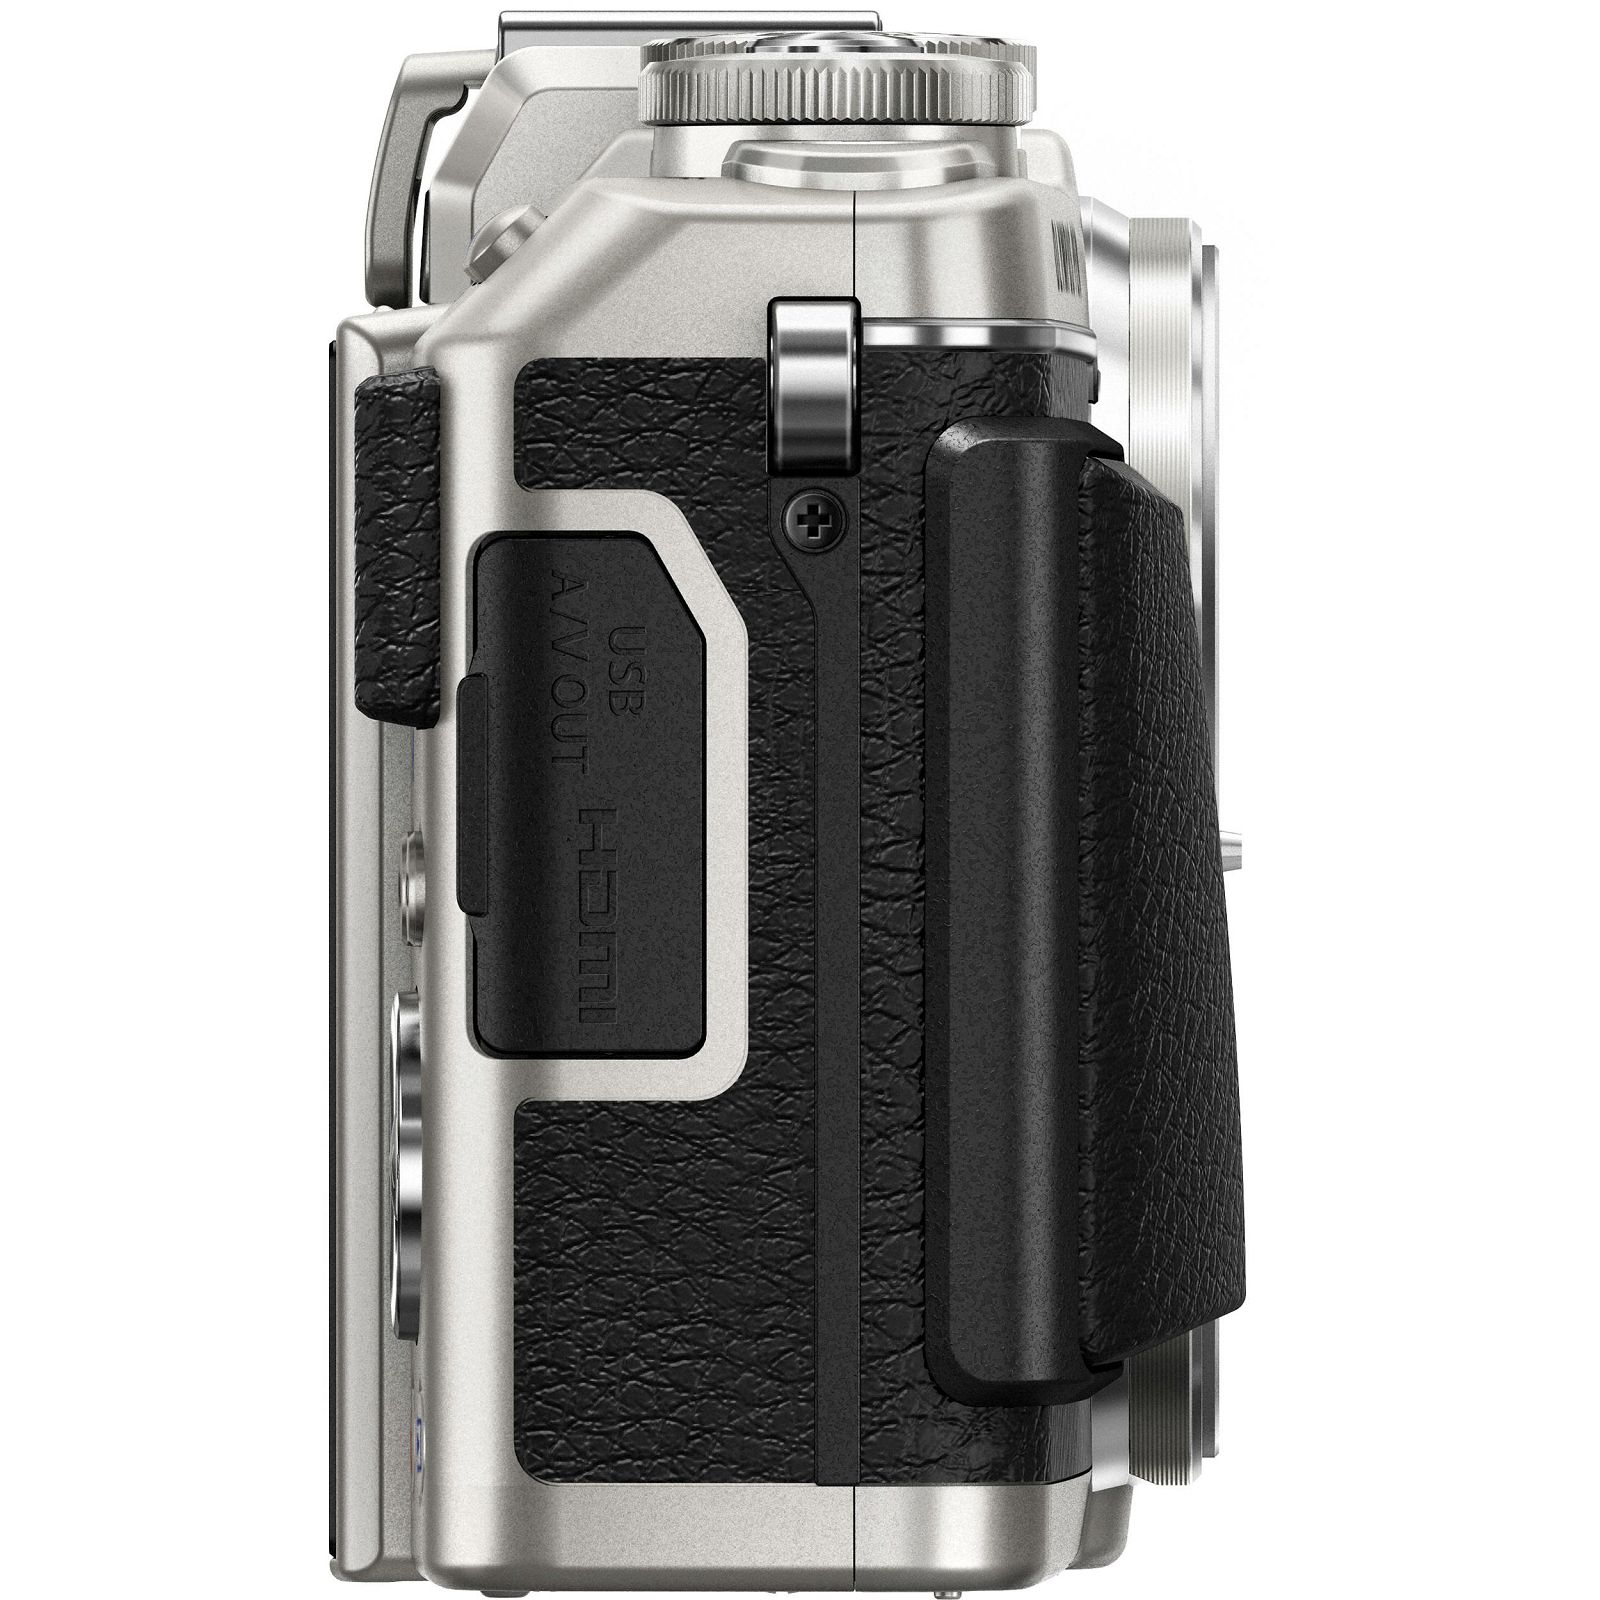 Olympus E-PL7 Body silver incl. Charger + Battery Micro Four Thirds MFT - PEN Camera digitalni fotoaparat V205070SE000